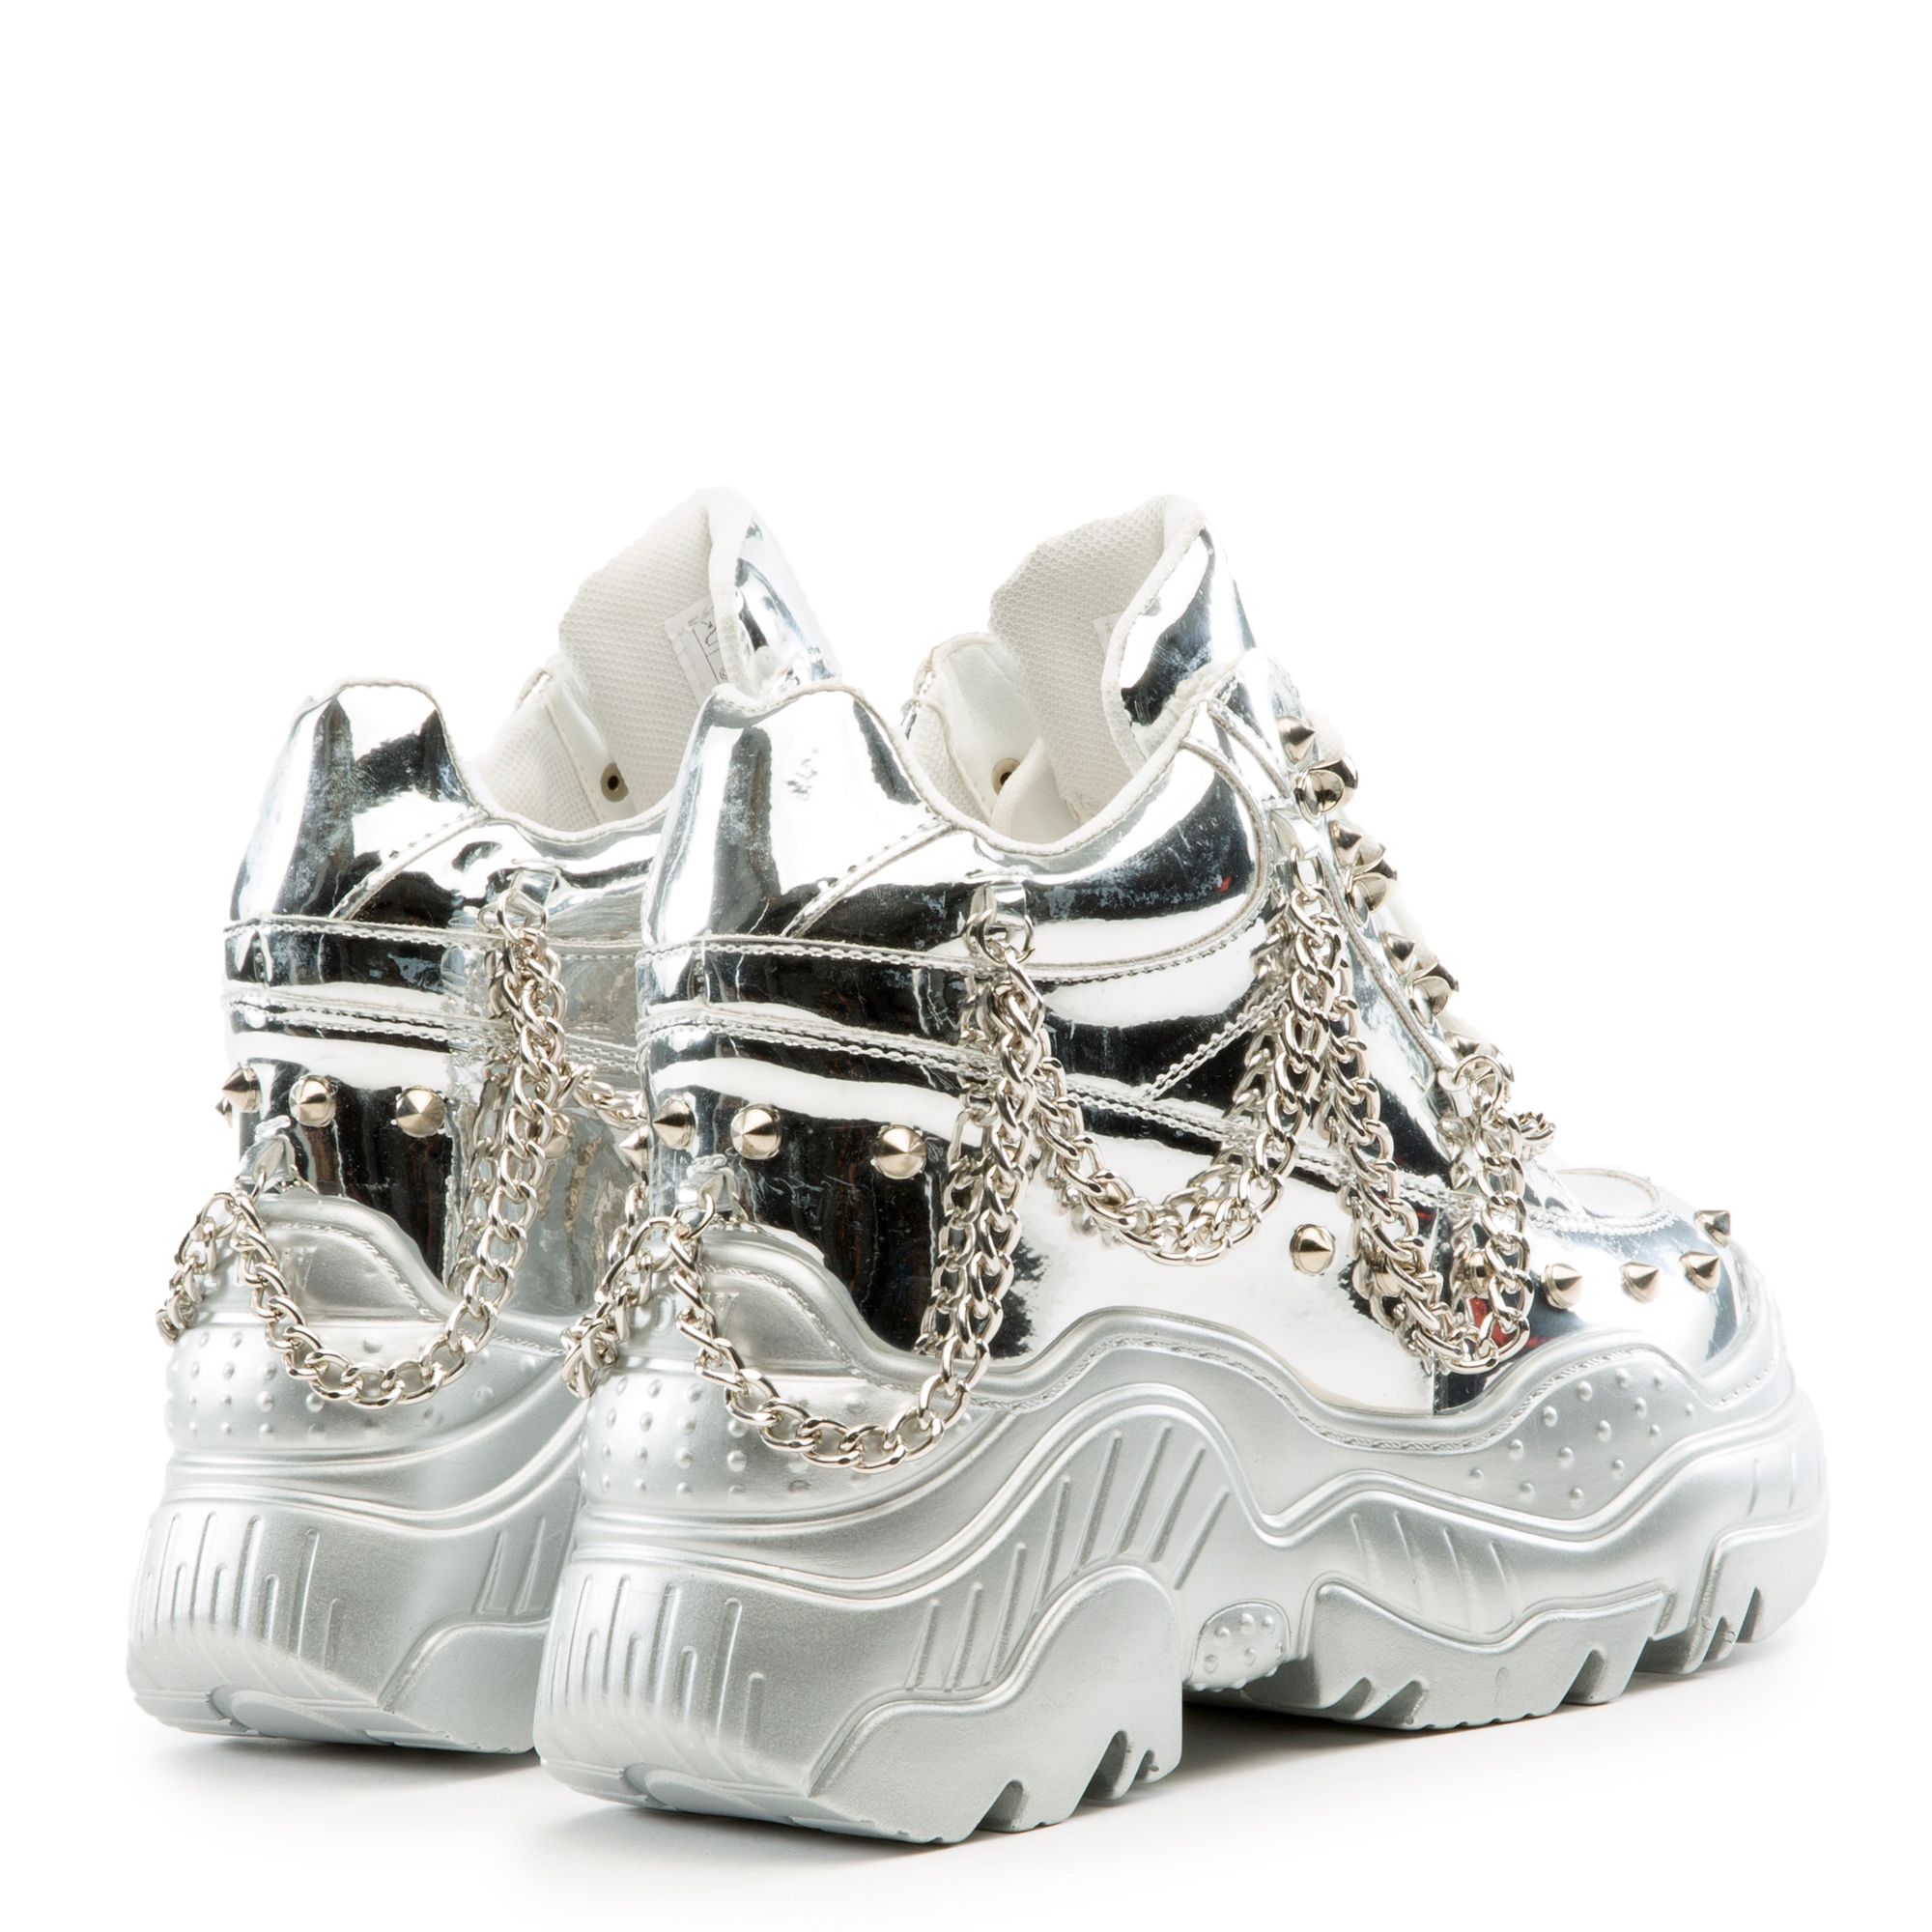 Buffalo London Metallic Platform Sneakers - Silver